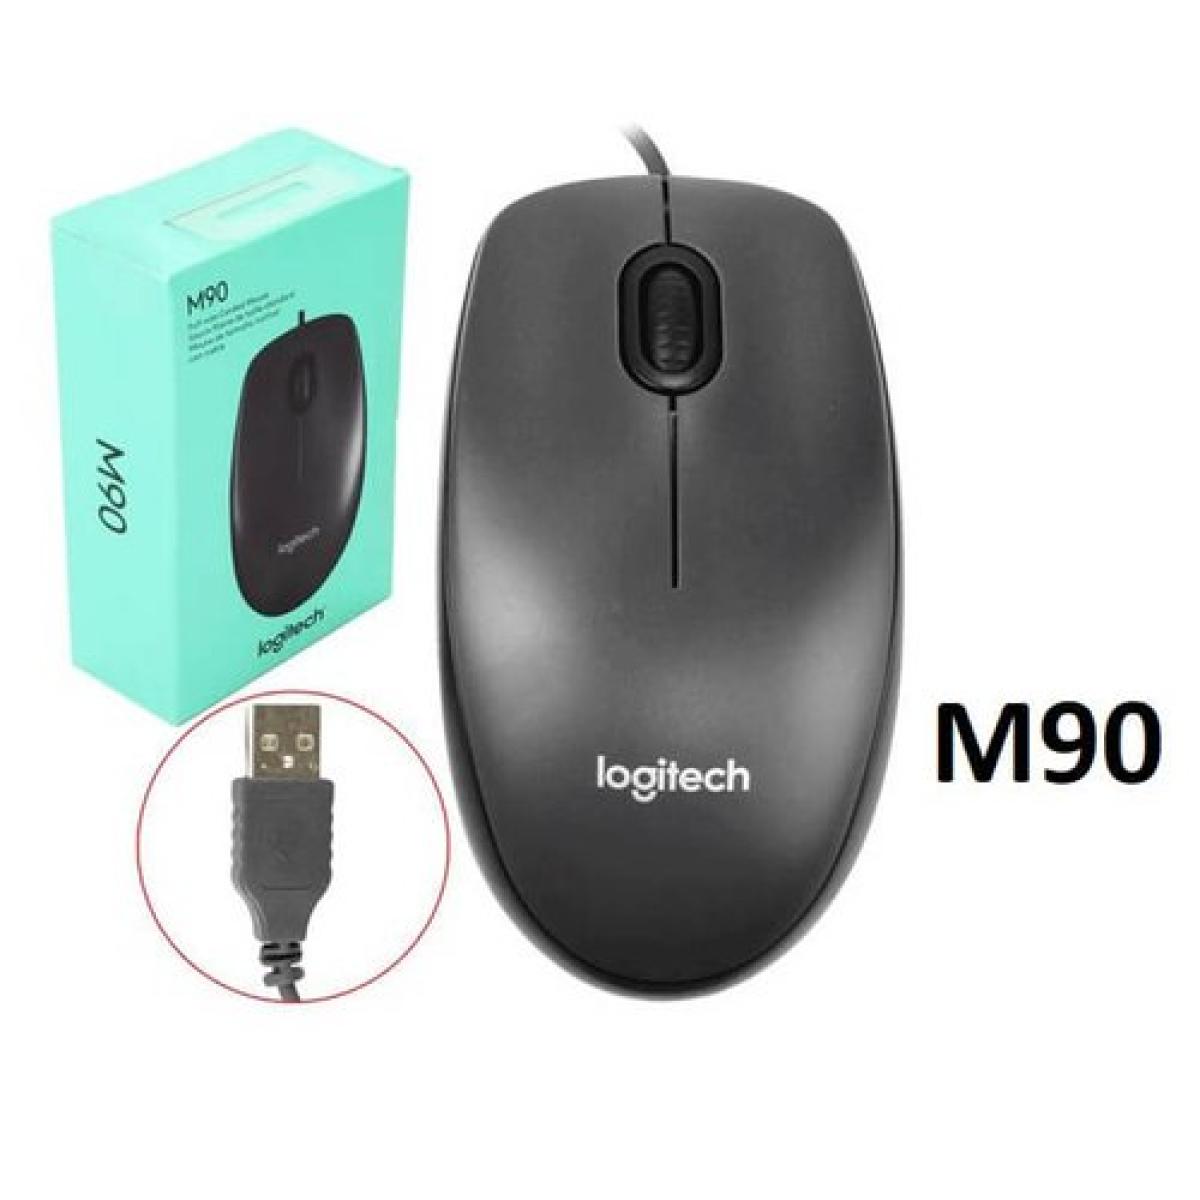 Logitech M90 1000 dpi USB Wired Optical Mouse, Comfort Ambidextrous Design - Black